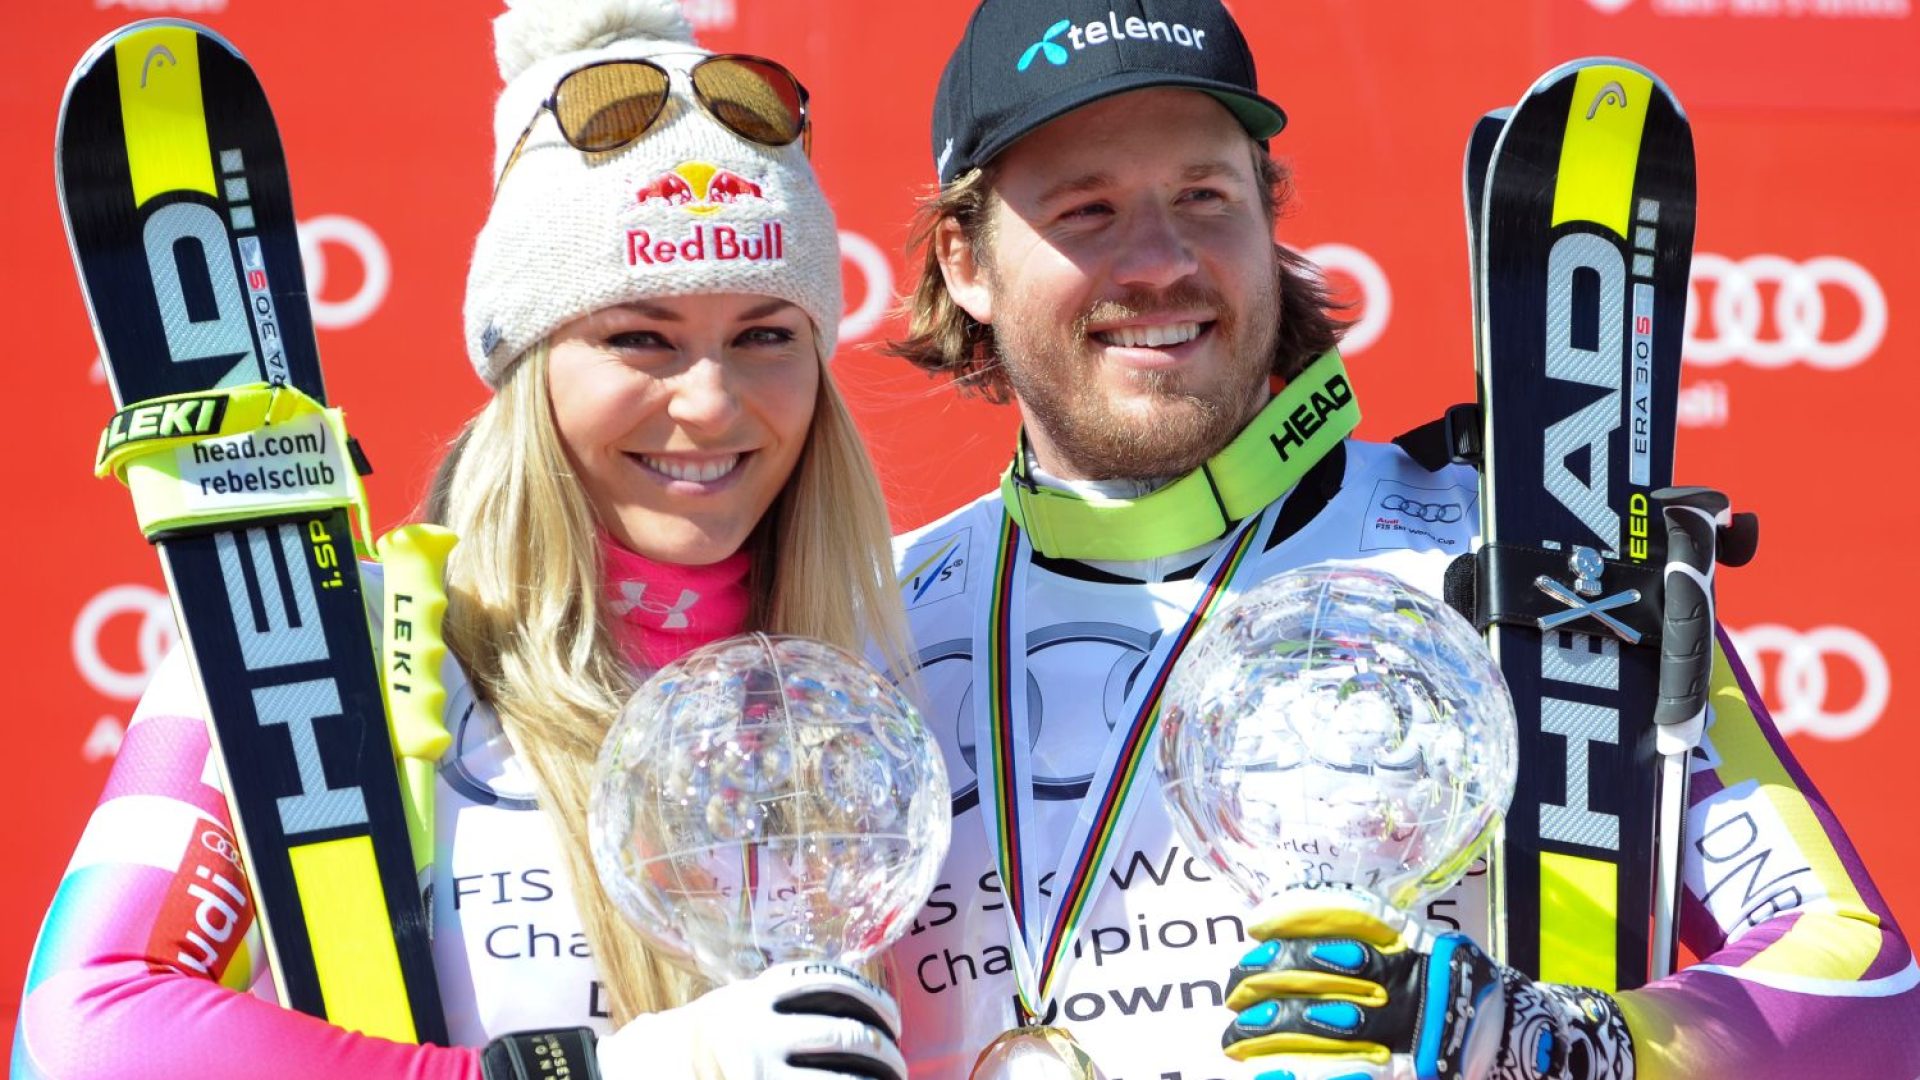 the-fastest-downhill-skiers-of-this-season-lindsey-vonn-usa-and-kjetil-jansrud-nor